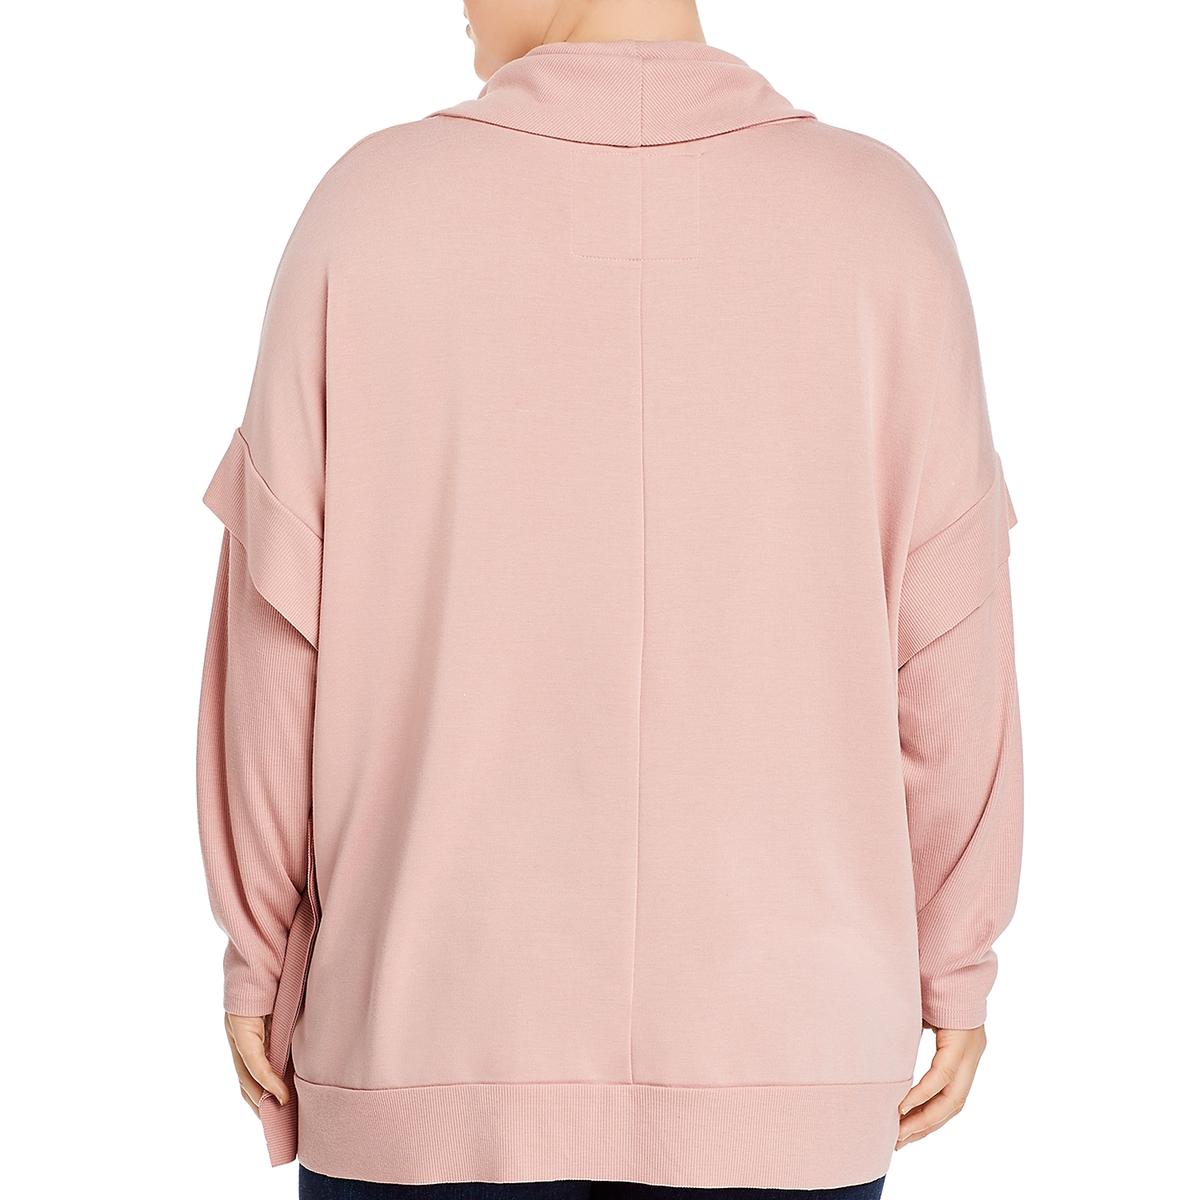 Cupio Blush Womens Cowl Neck Ribbed Shirt Sweater Top Plus BHFO 7482 | eBay